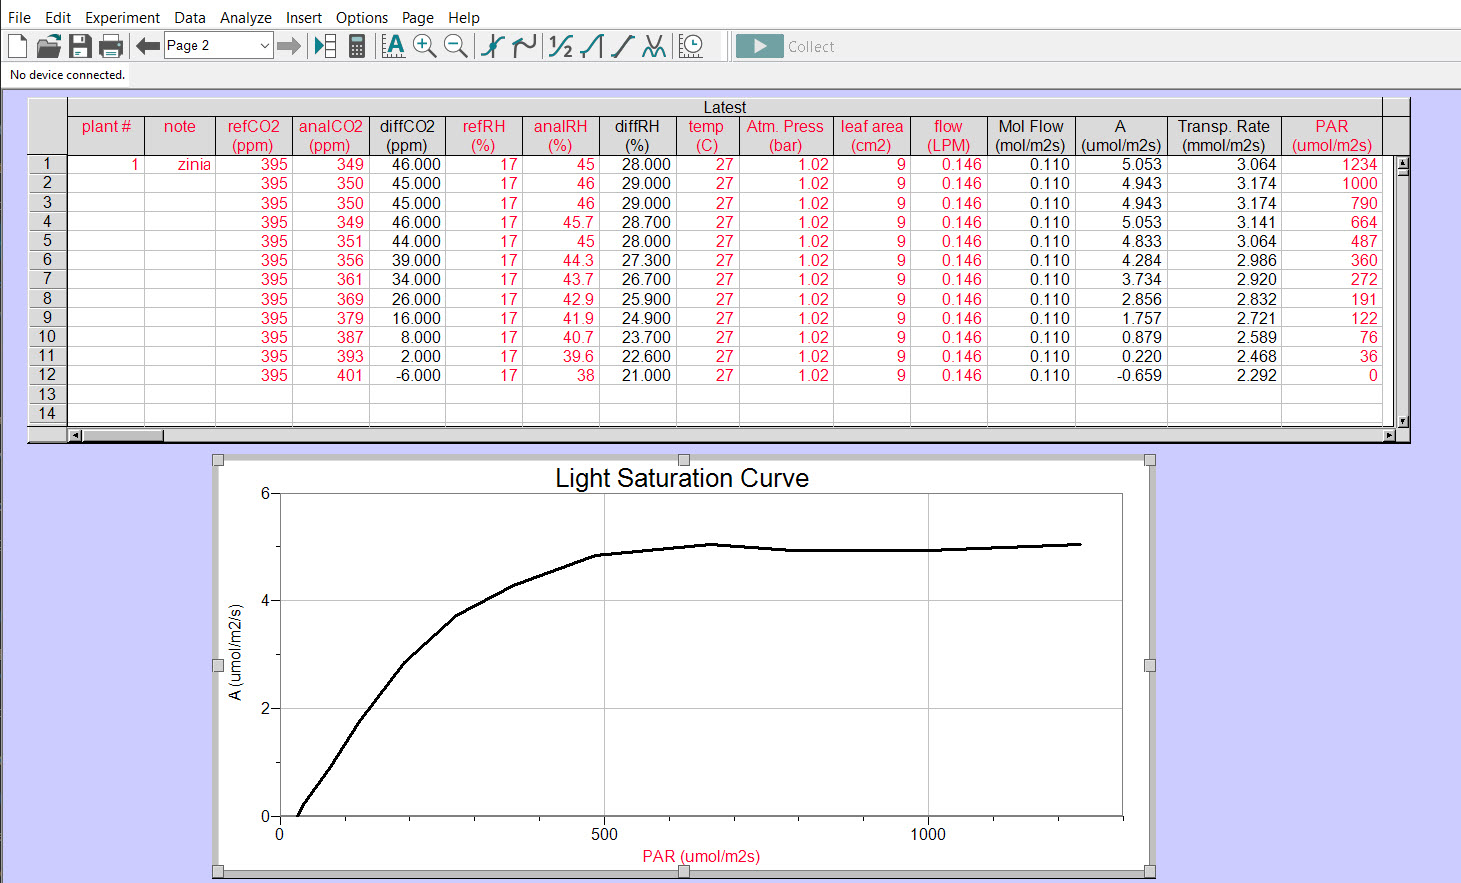 Light Saturation Curve Calculations (Zinnia Leaf Experiment)